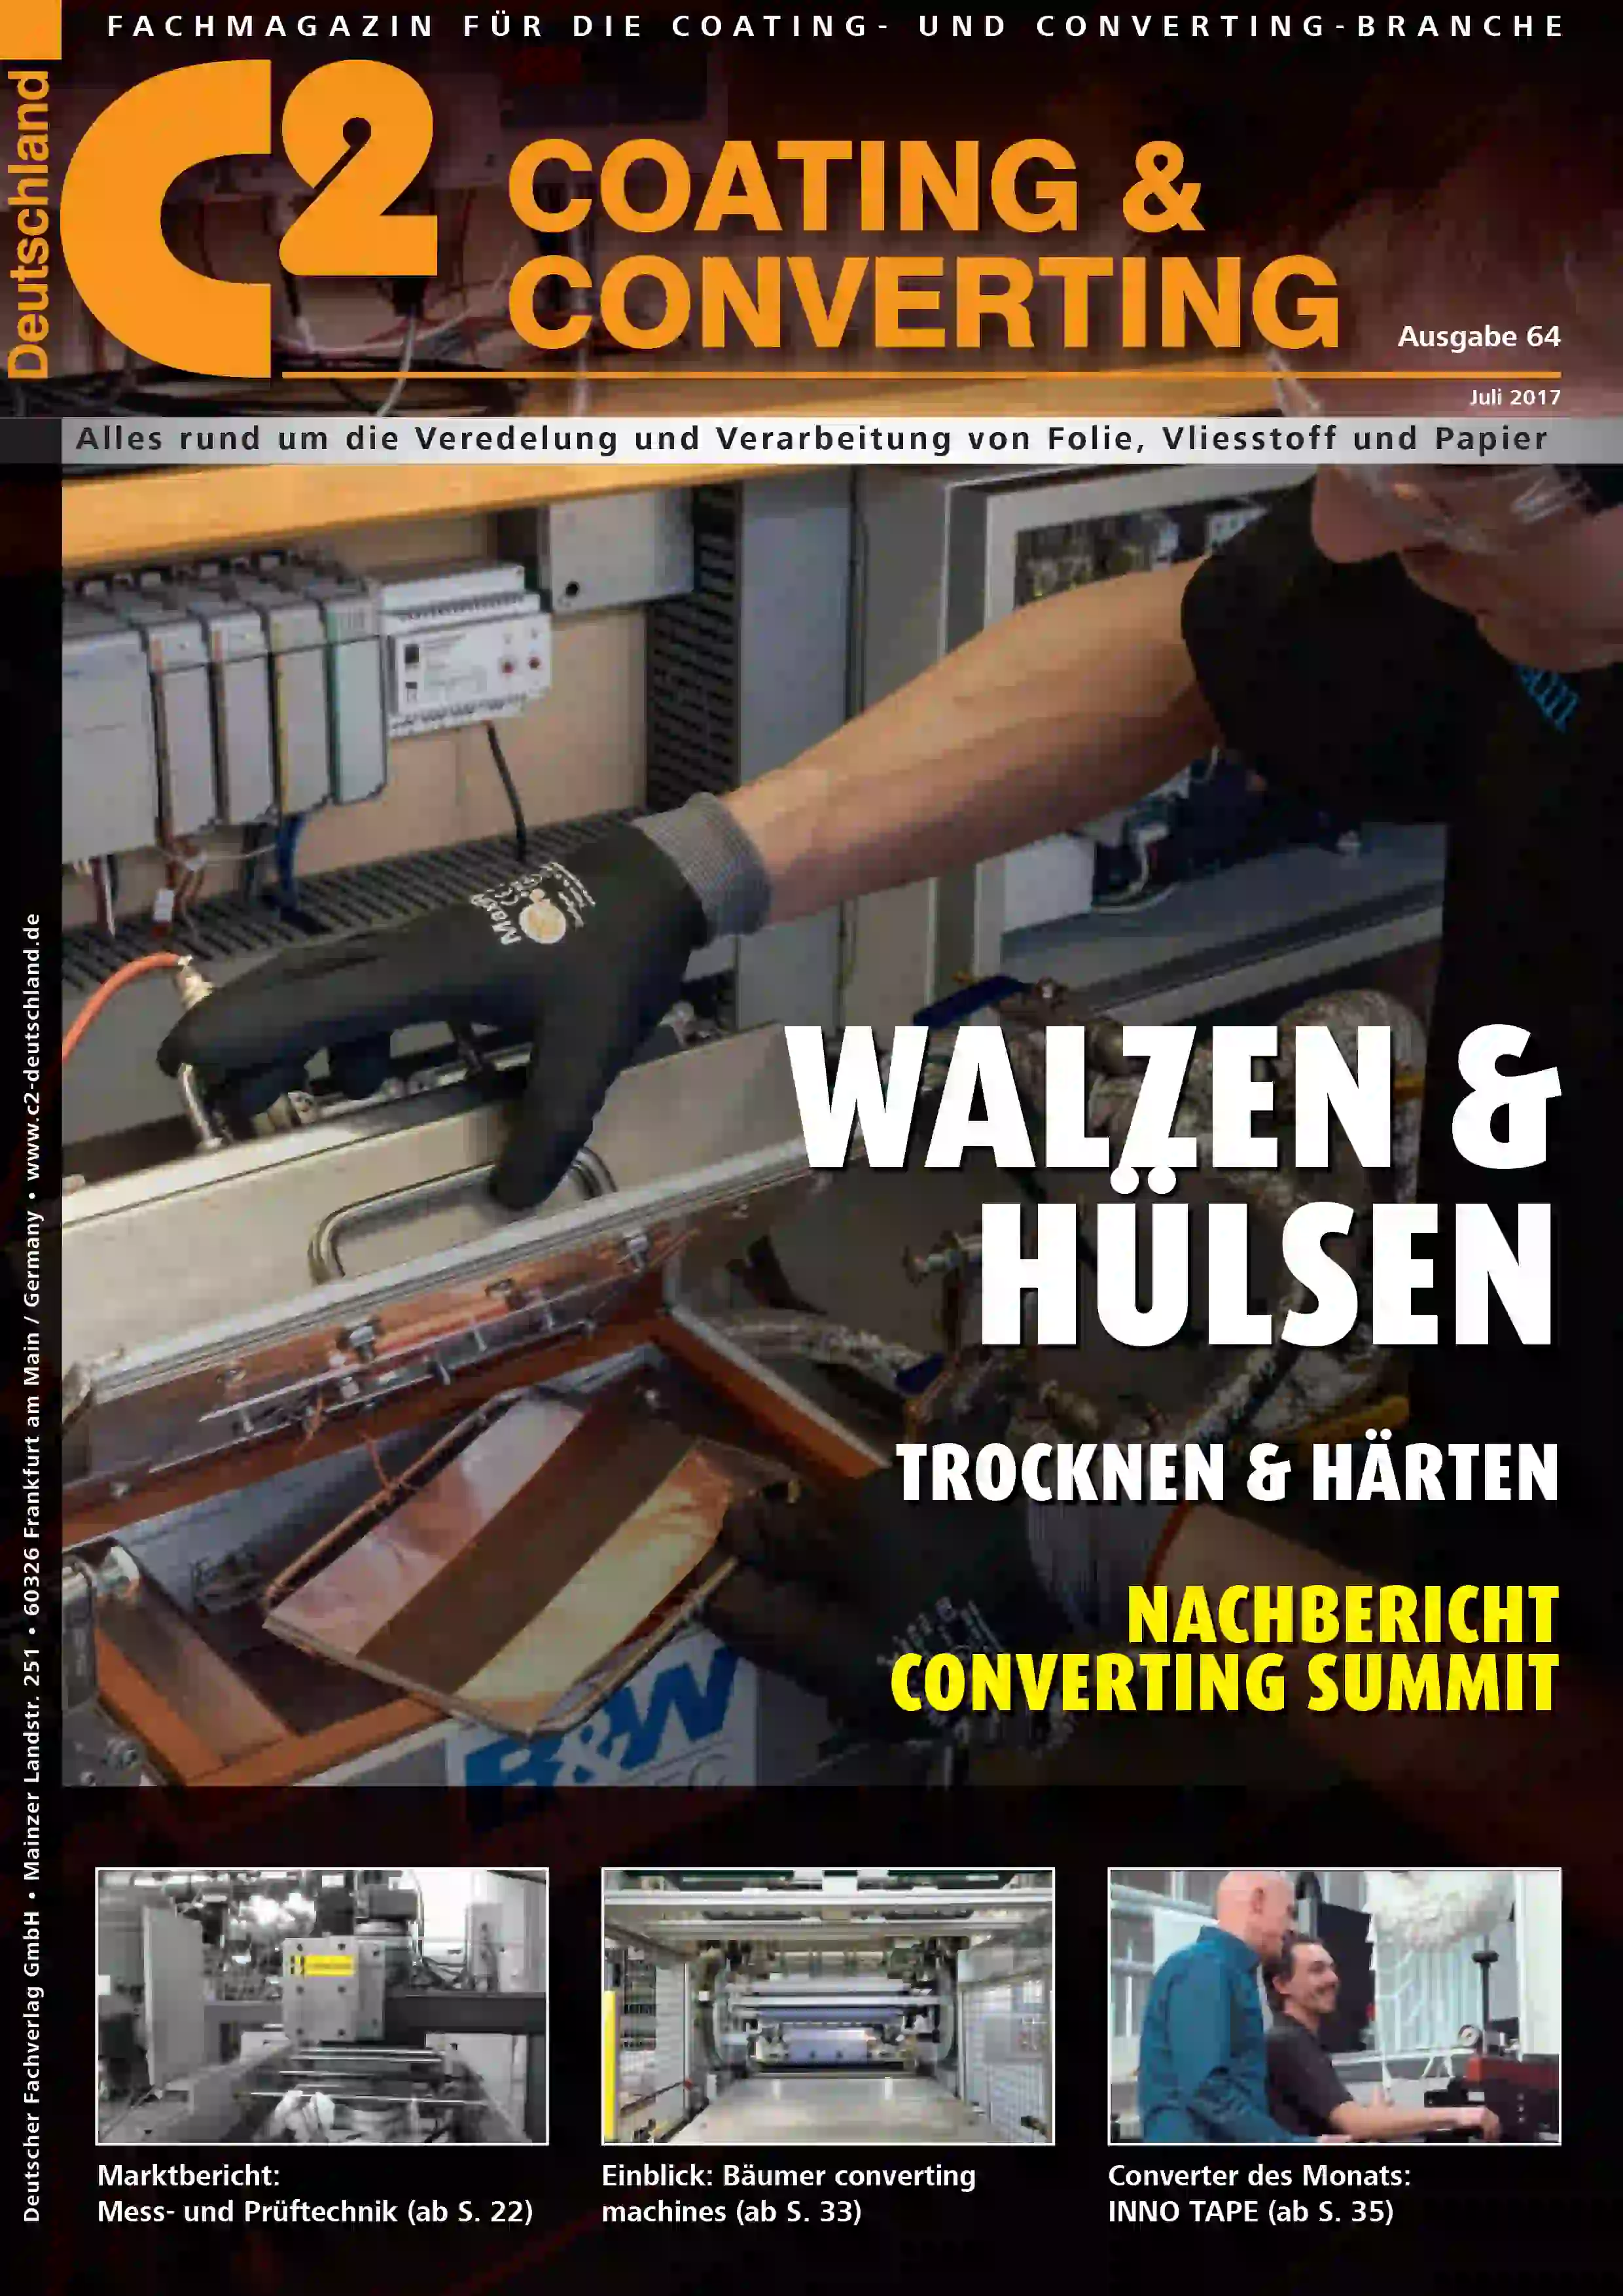 Hammer-IMS published in C2 Coating & Converting magazine